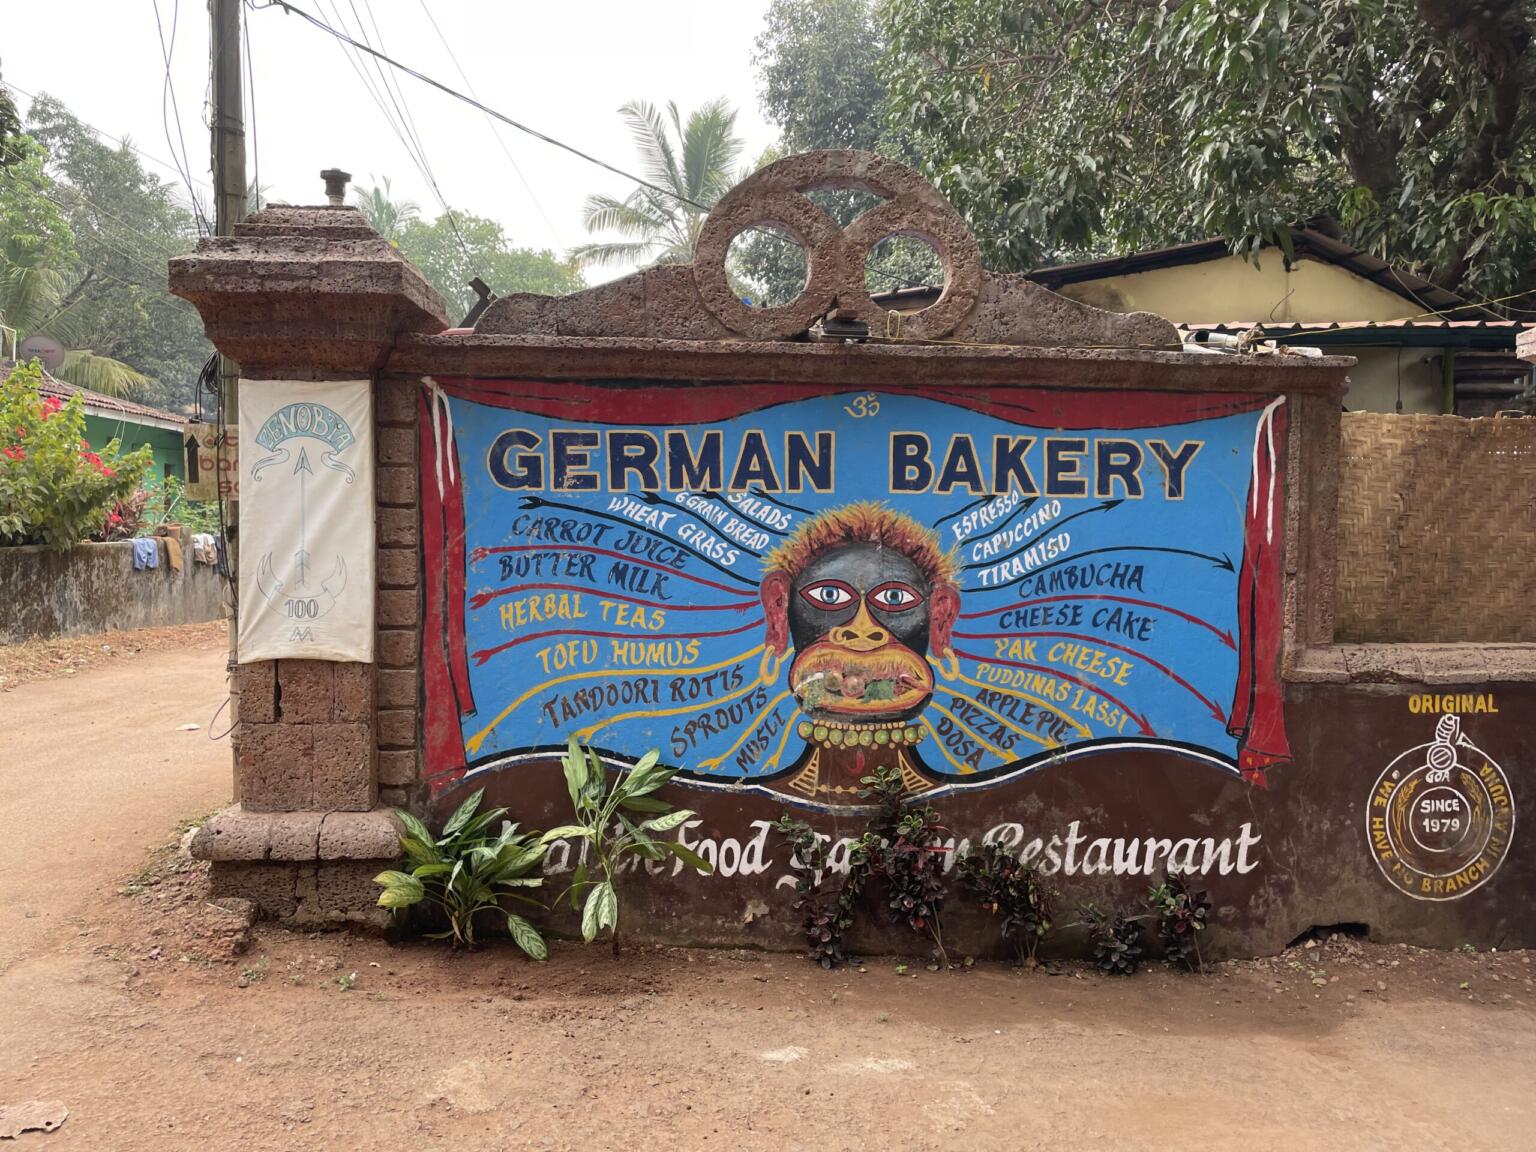 The German Bakery in Goa